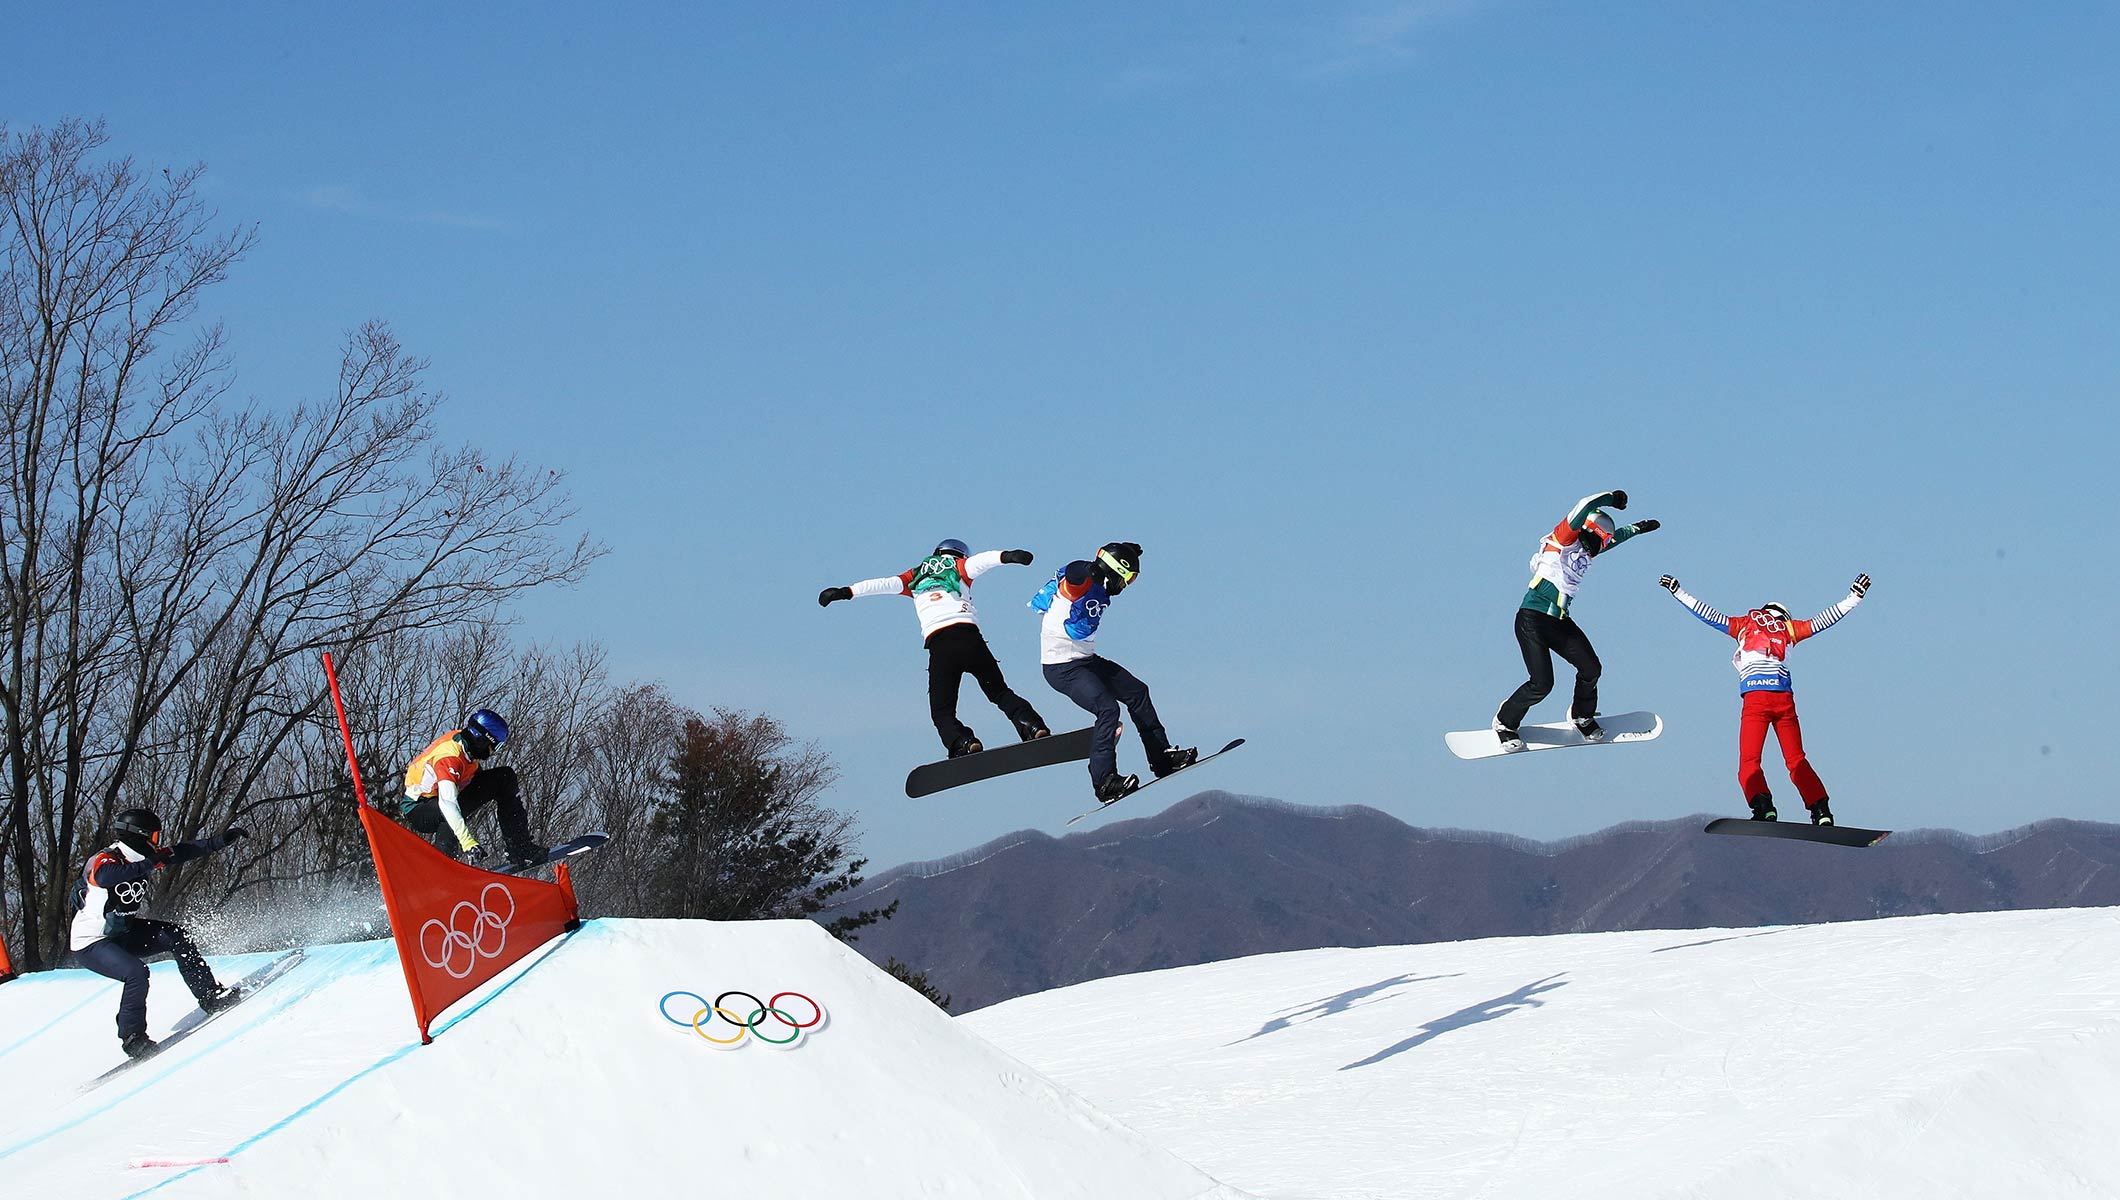 Olympic Snowboarding - Winter Olympic Sport